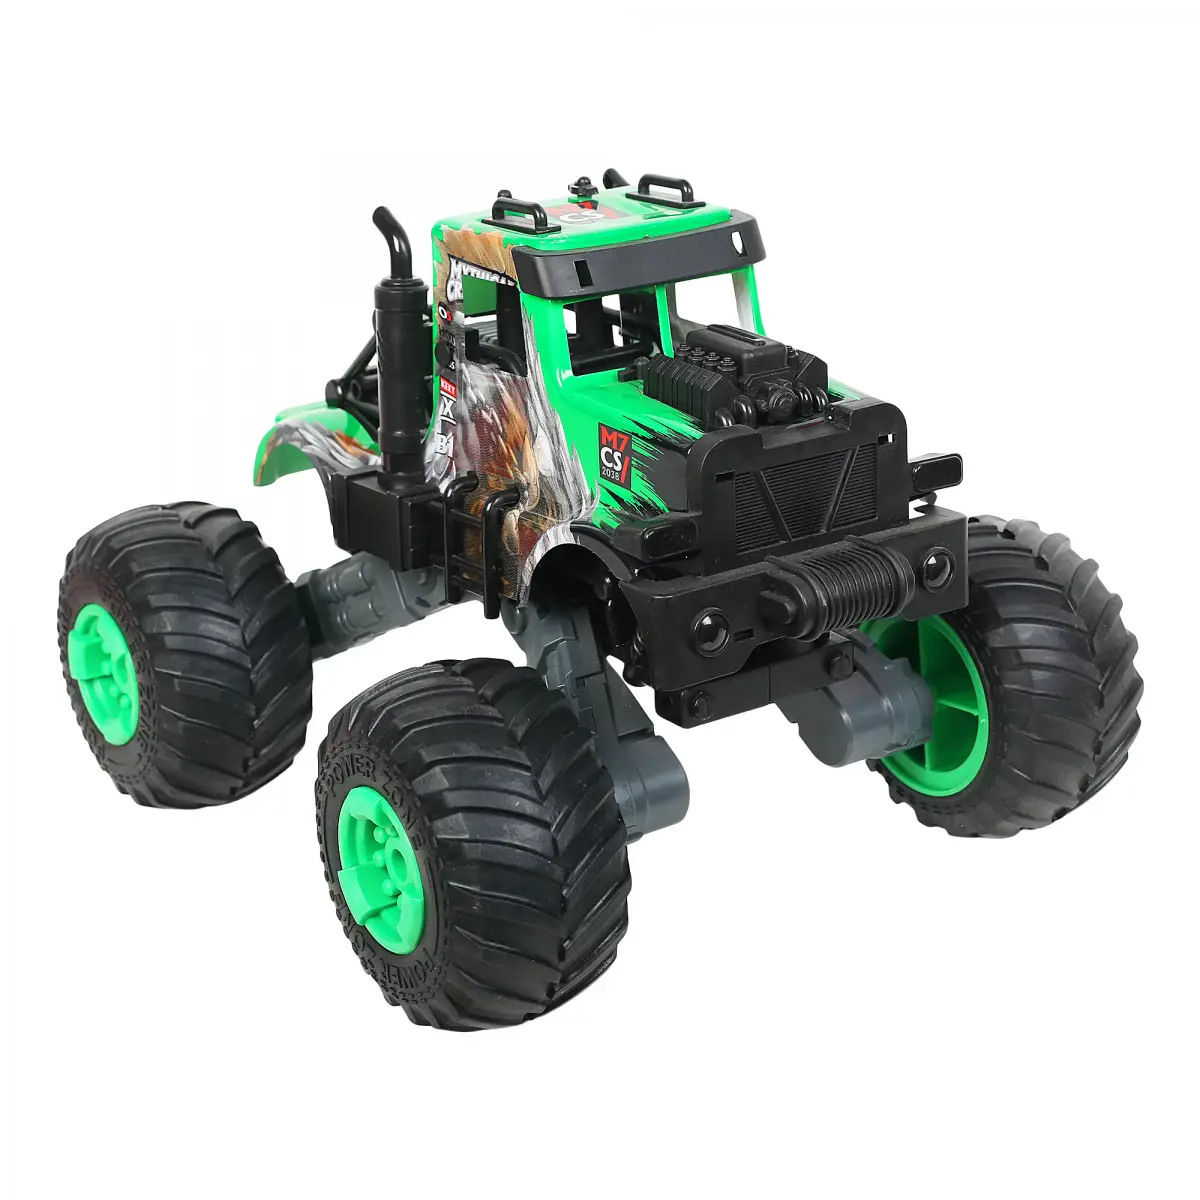 Ralleyz Monster Racing Car, 4 Wheel Drive, Remote Control Toys, 8Y+, Green